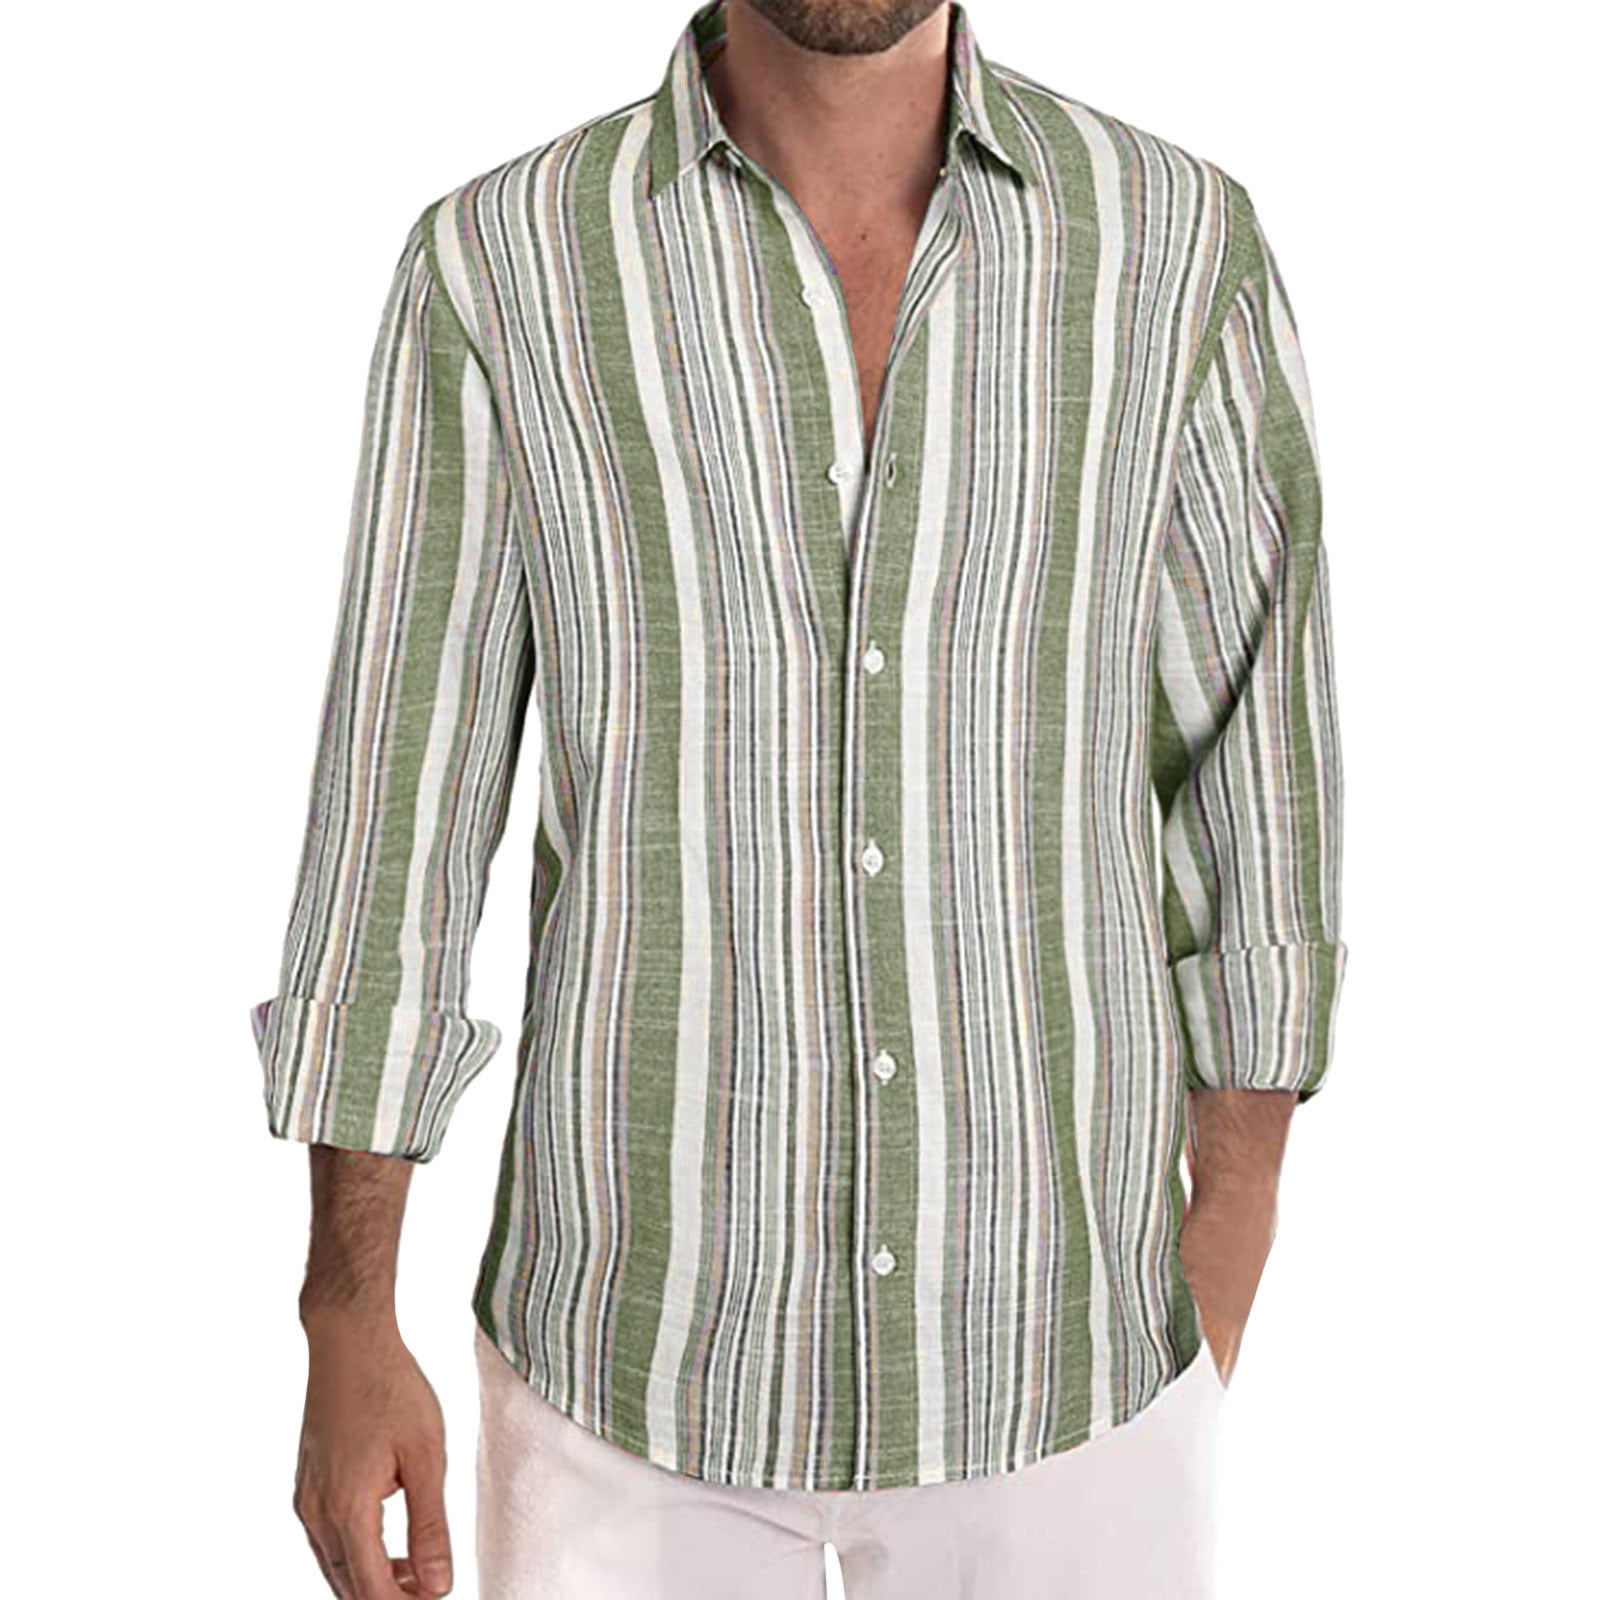 Polo Ralph Lauren - Floral-Print Short-Sleeve Shirt - Men - Cotton/Linen/Flax - S - White